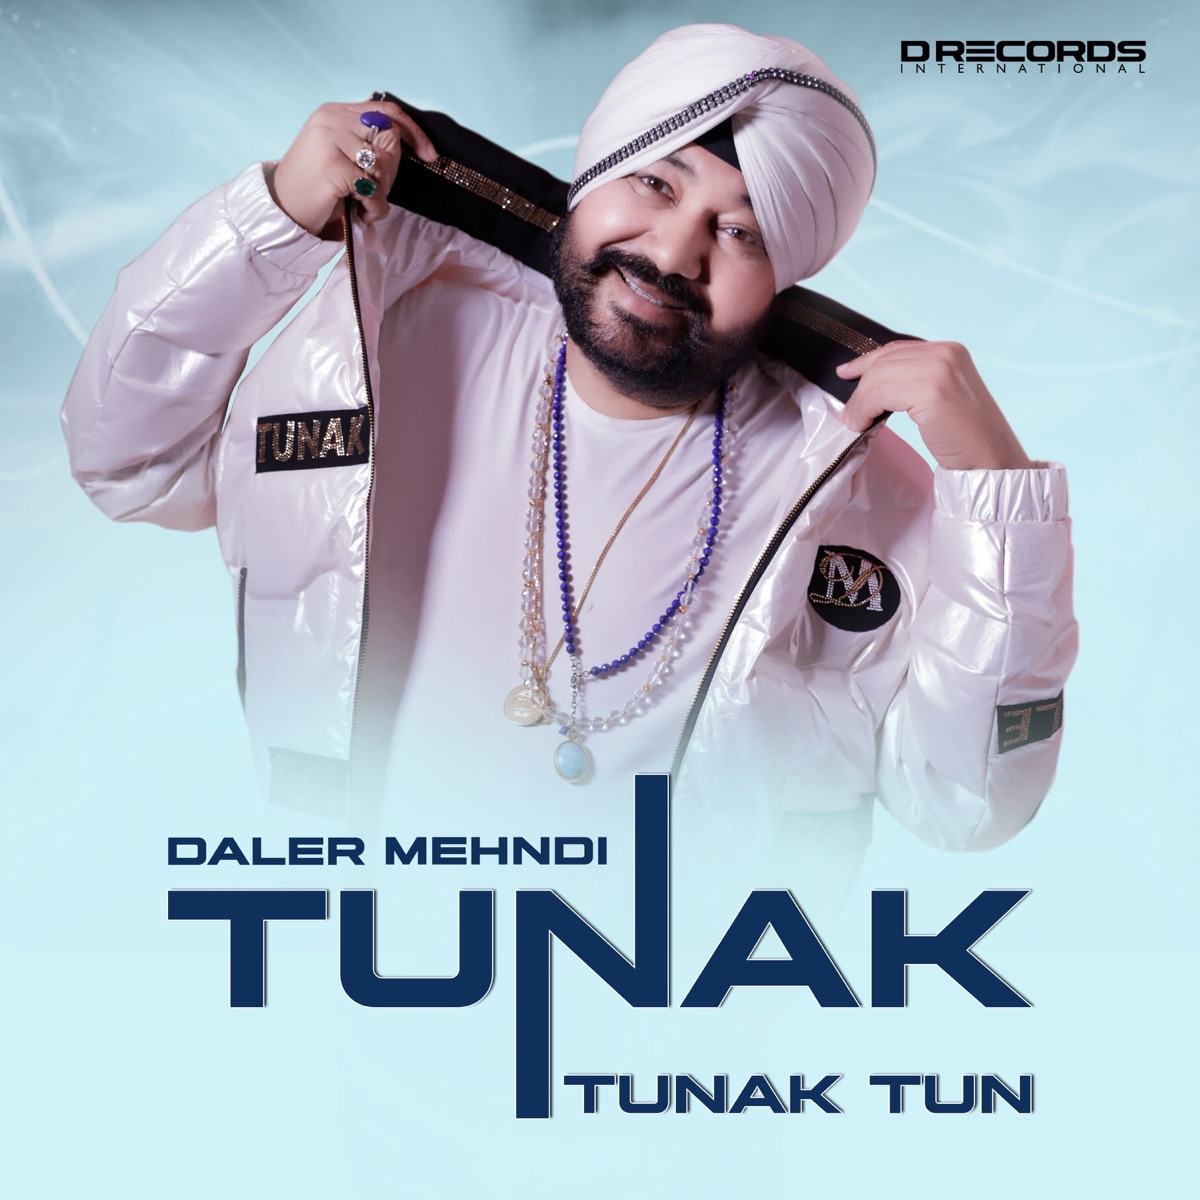 Tunak Tunak Tun by Daler Mehndi on Apple Music